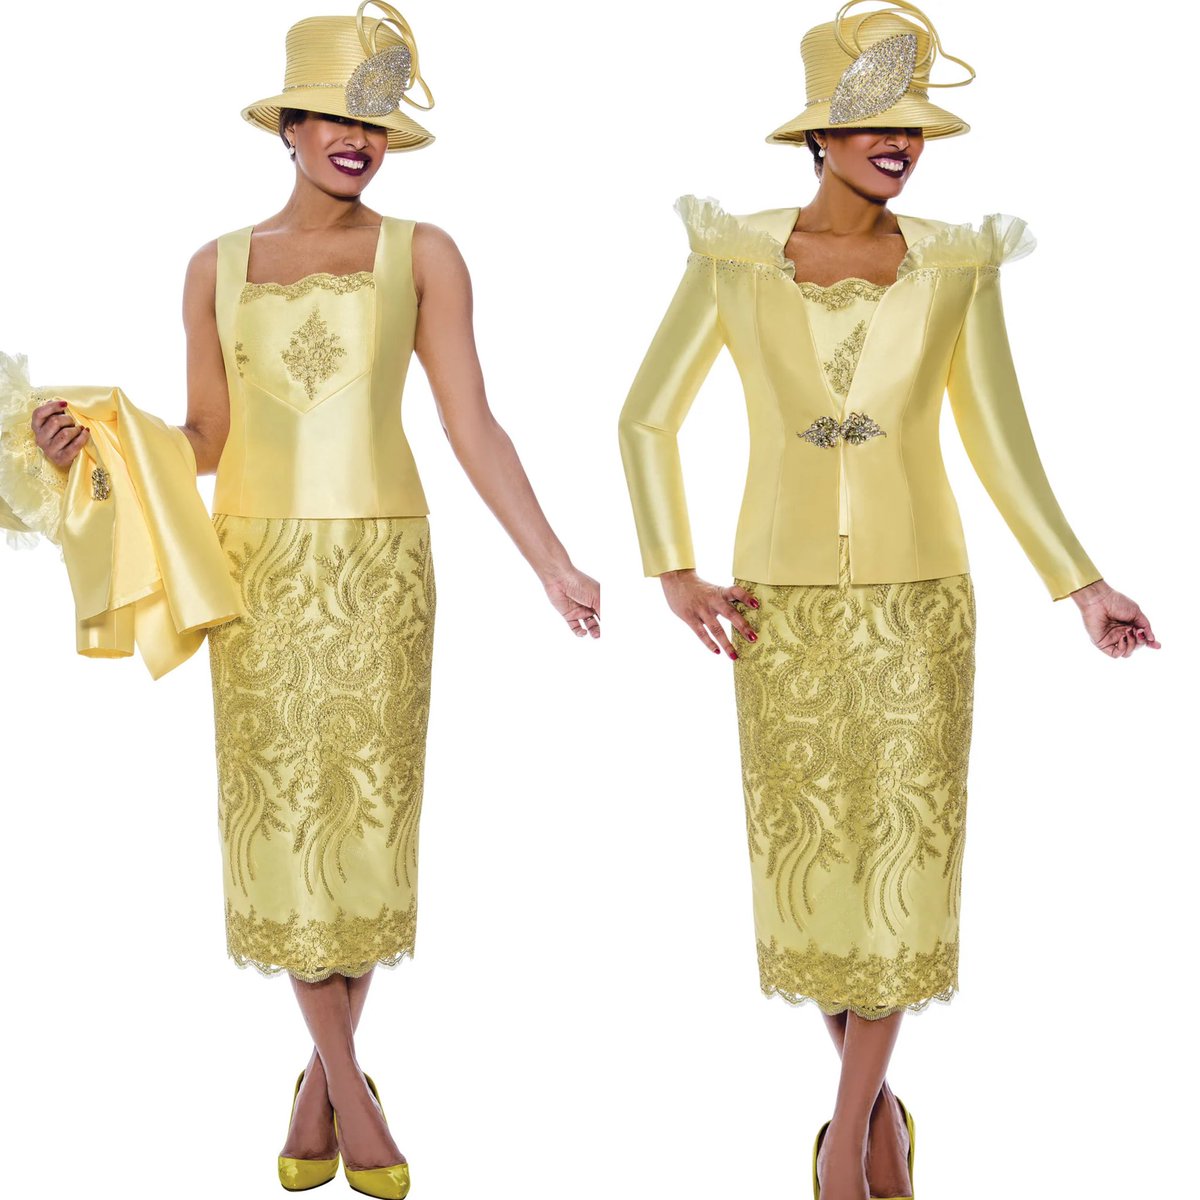 Ben Marc 2043 Yellow Lace Skirt Suit 
divasdenfashion.com/products/ben-m… 

#DivasDenFashion #skirtsuit #weddingfashion #yellowskirtsuit #yellowsuit #lace #laceskirtsuit #benmarc #funeralsuit #curvycouture #funeralfashion #luxefashion #ensemble #Curvystyle #curvygirlsrock #beautifulcurves